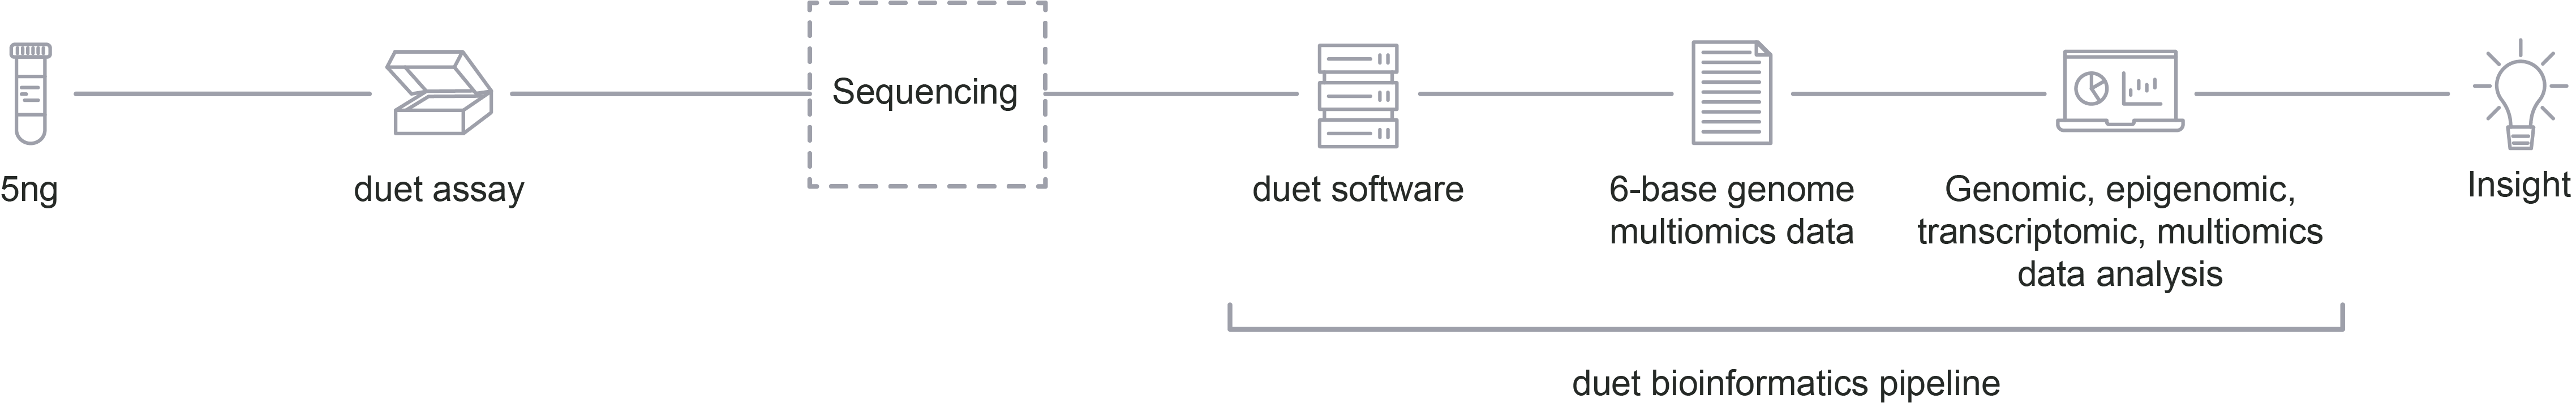 duet multiomics solution workflow